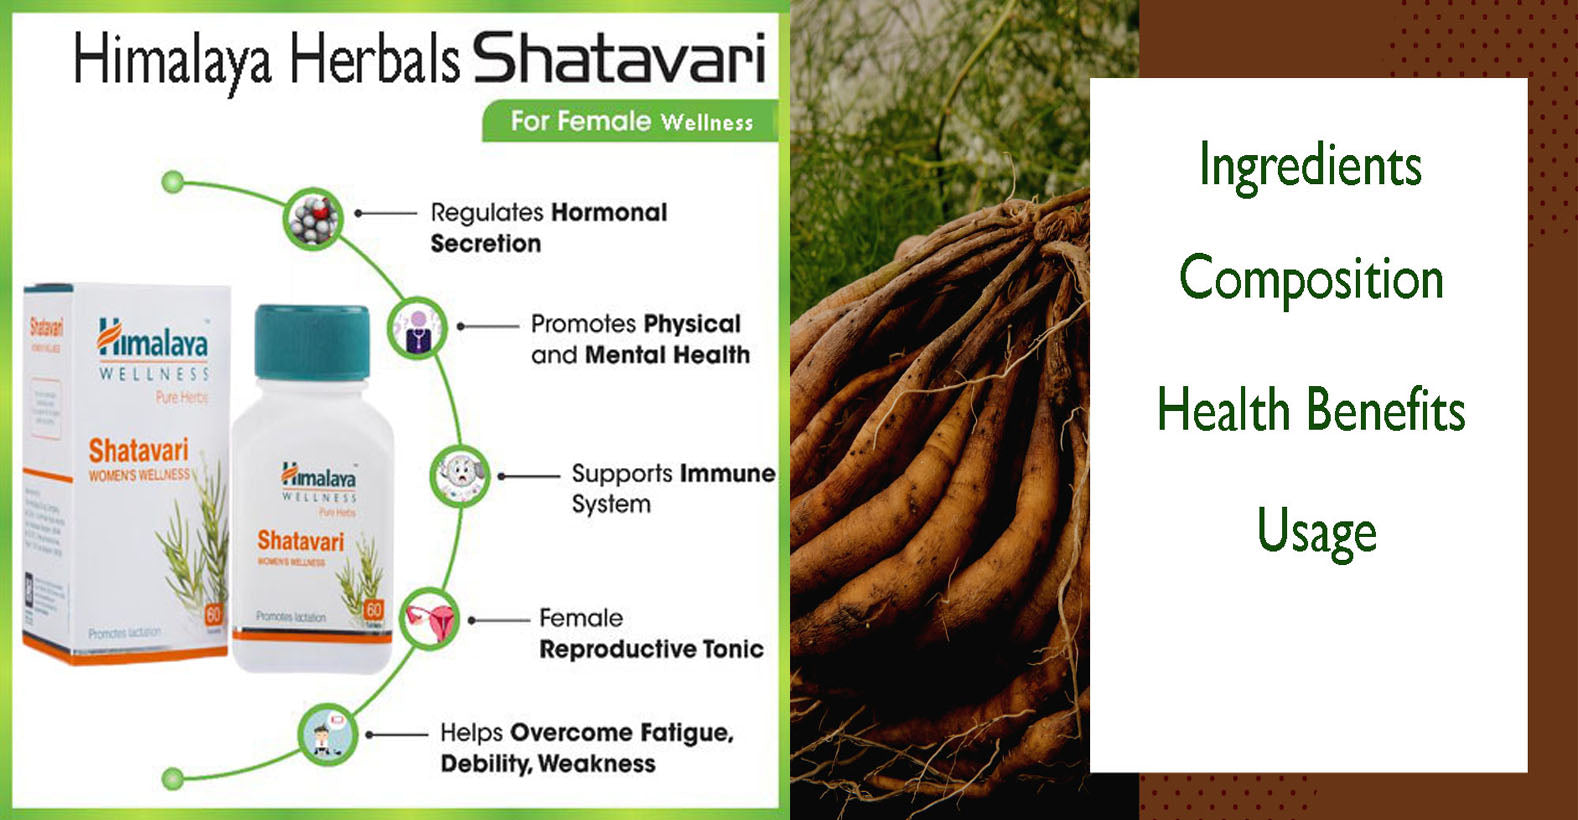 Himalaya Herbals Shatavari - Ingredients, Composition, Health Benefits, Usage